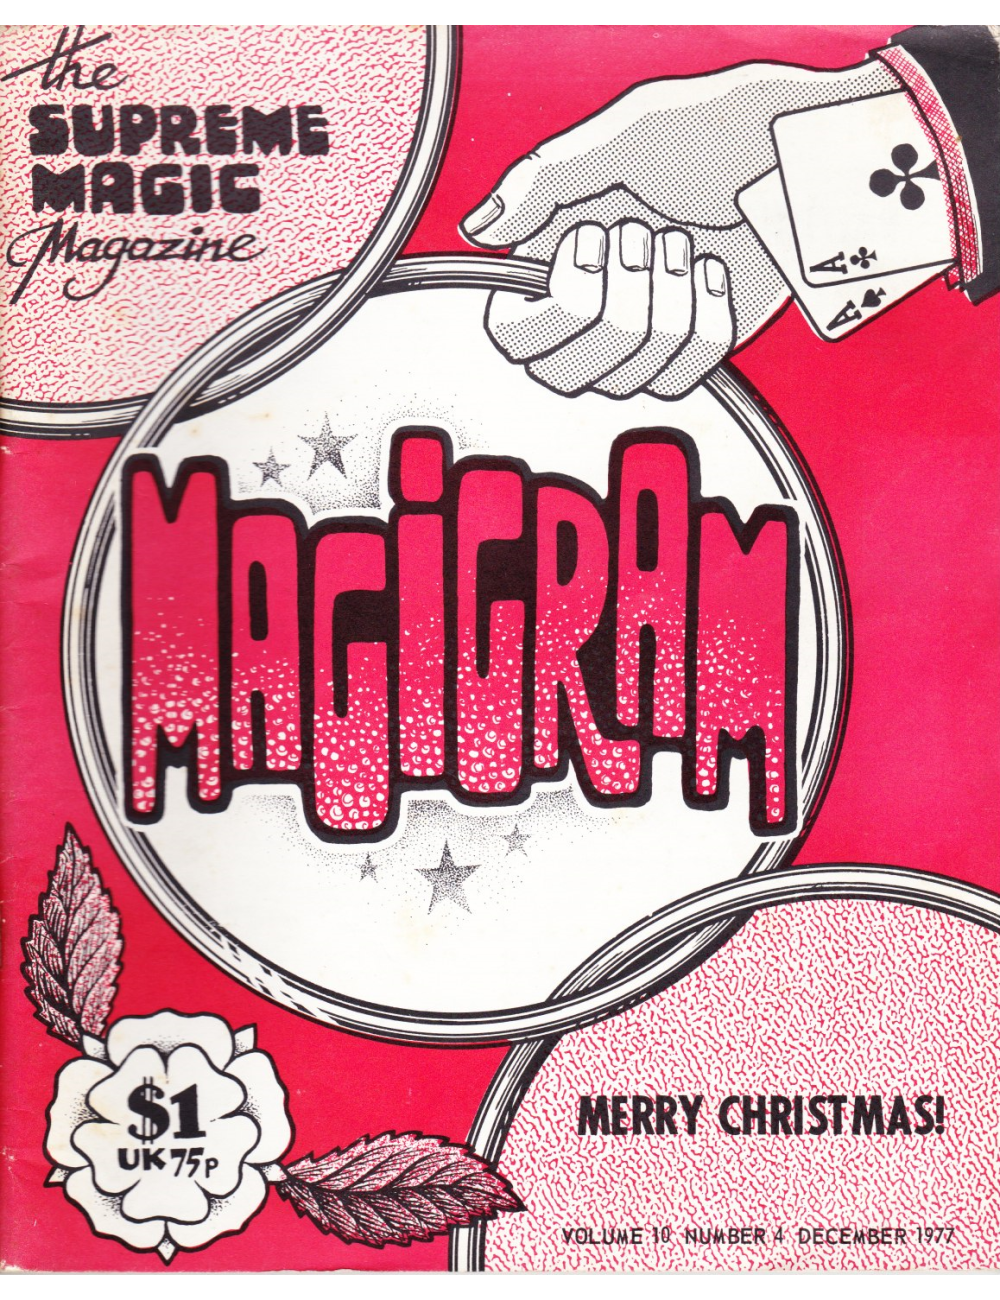 MAGIGRAM The Supreme Magic Magazine Volume 10, Number 4, December 1977